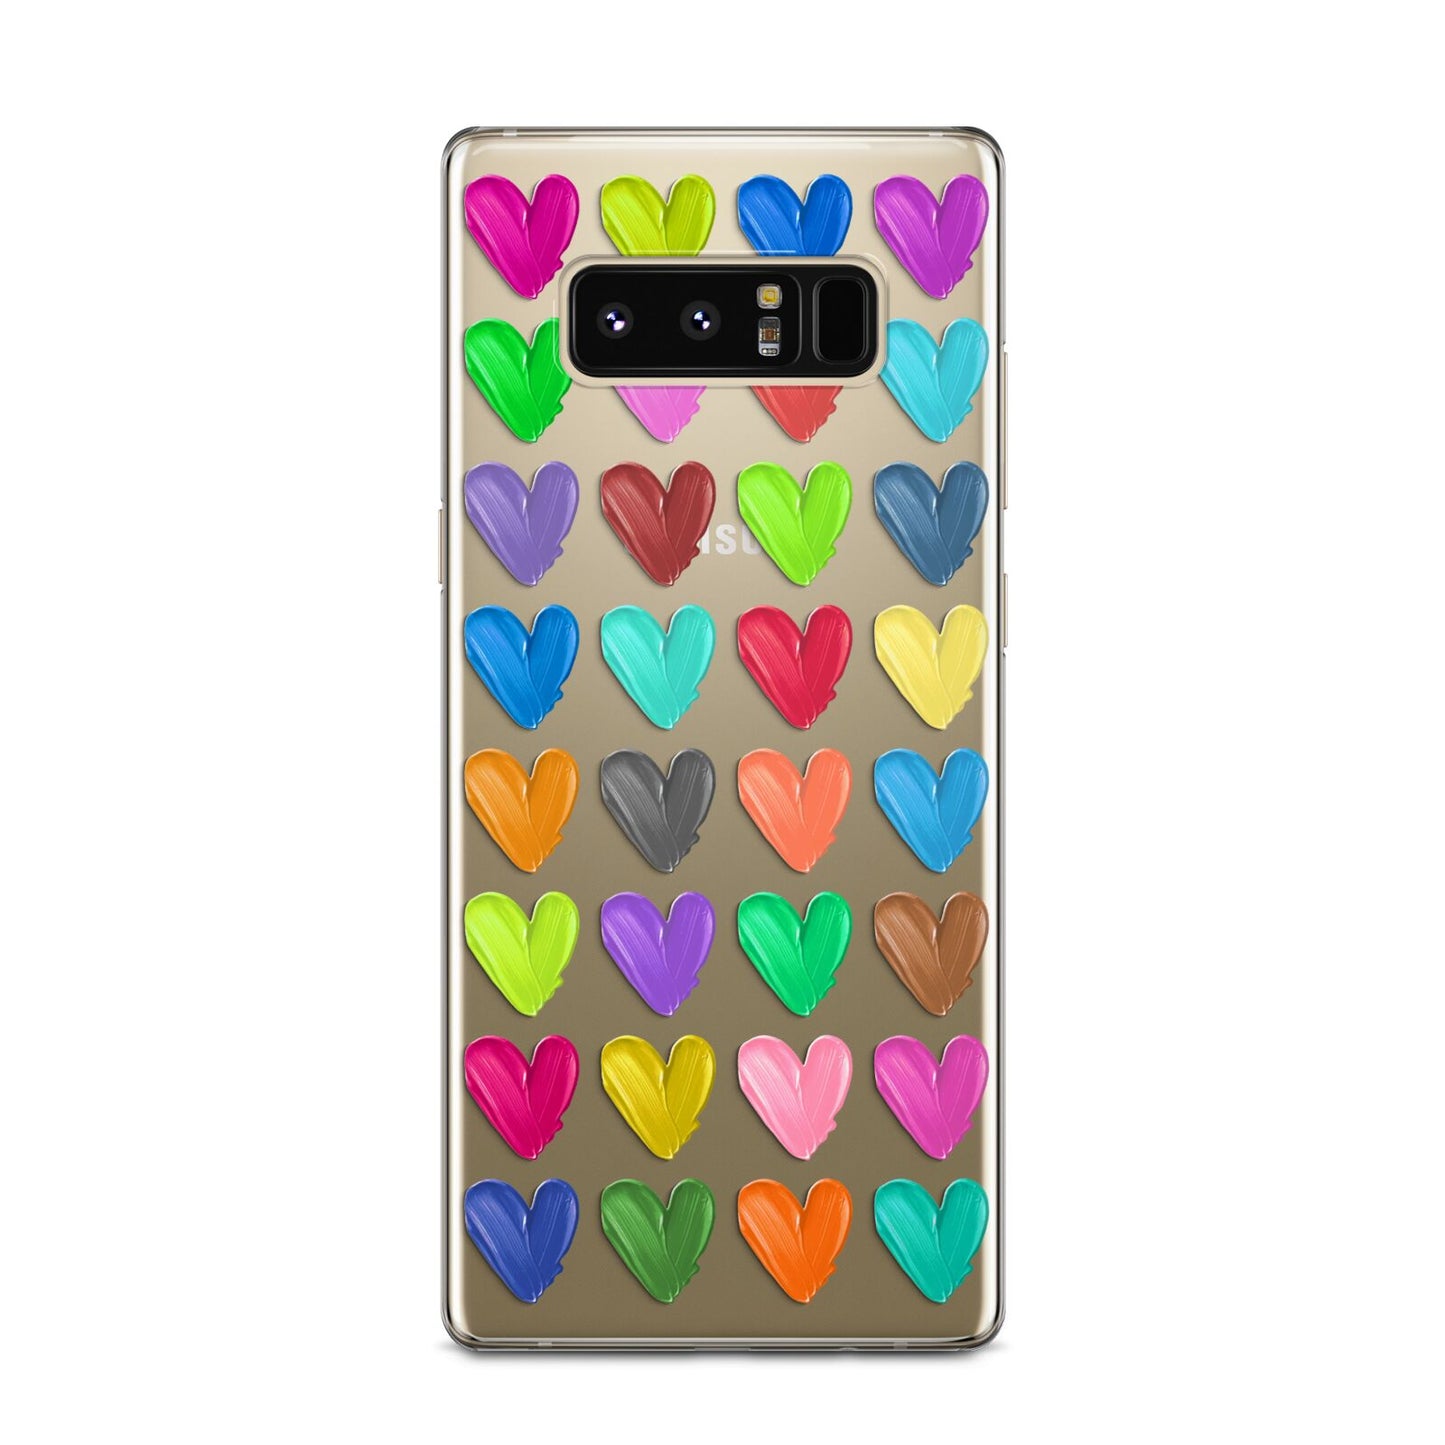 Polka Heart Samsung Galaxy Note 8 Case